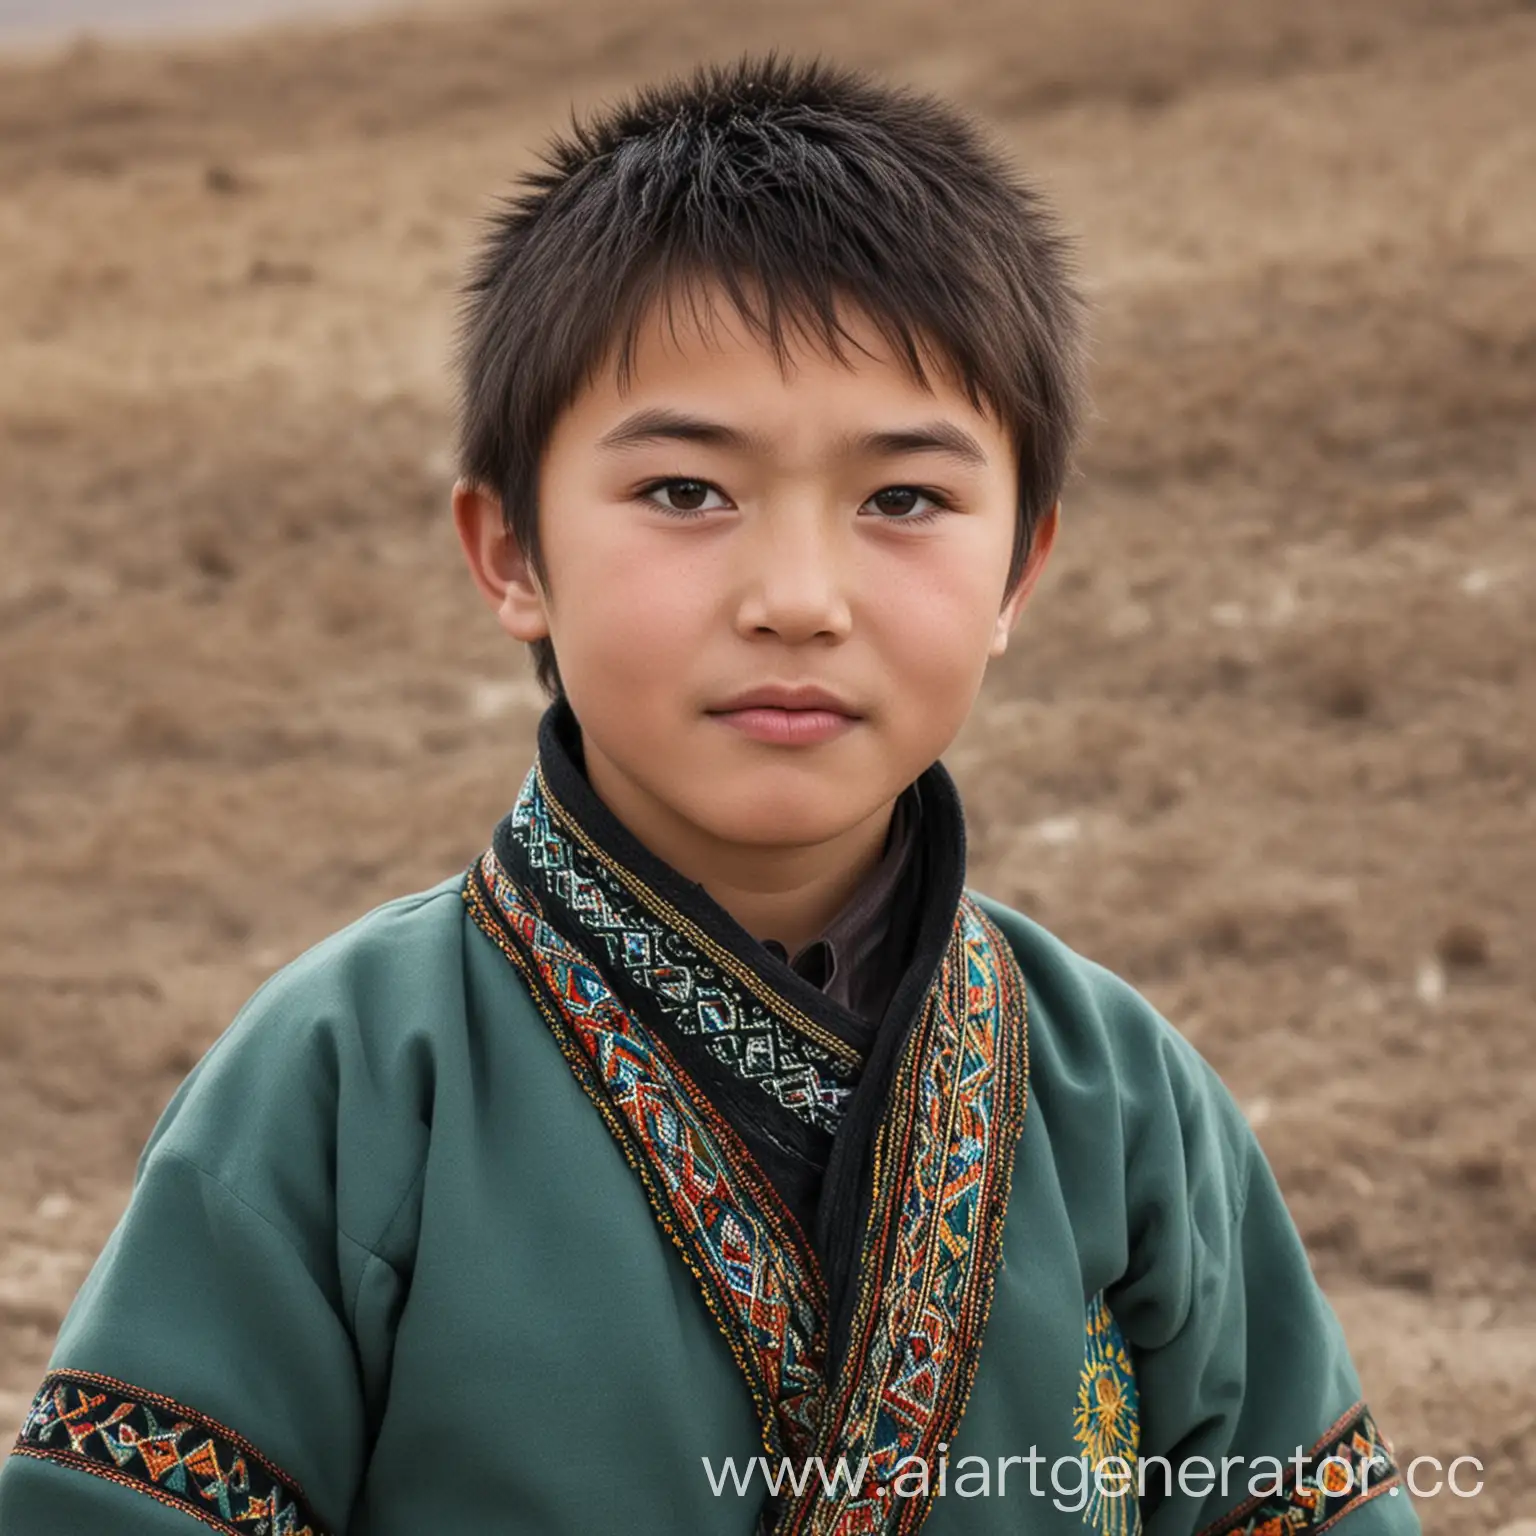 Kazakh-Boy-Wearing-Traditional-Attire-in-Rural-Landscape